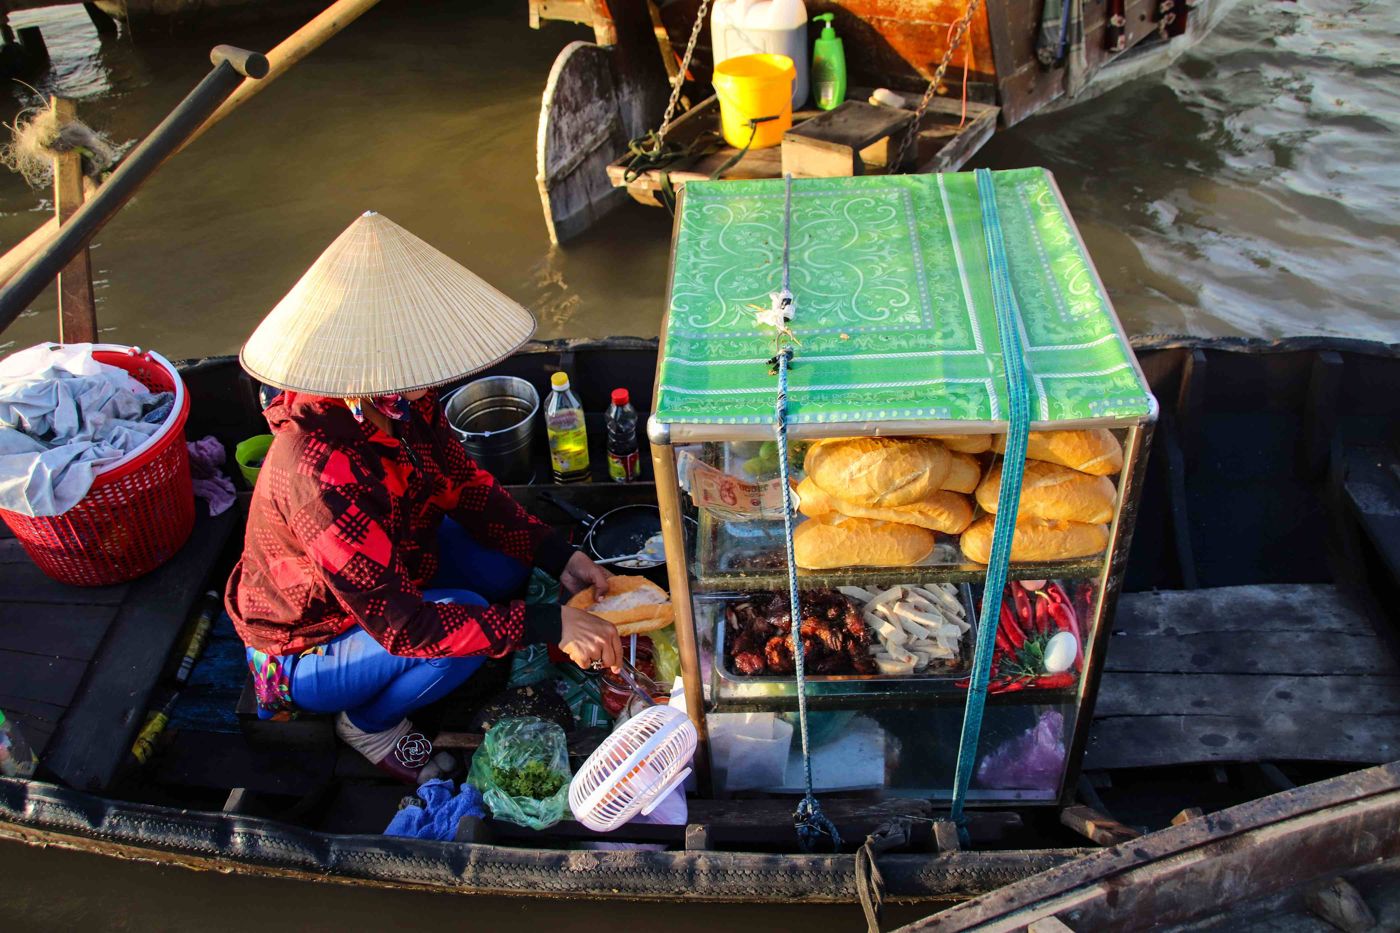 Cho Noi Cai Rang - Eating experiences while visiting floating market